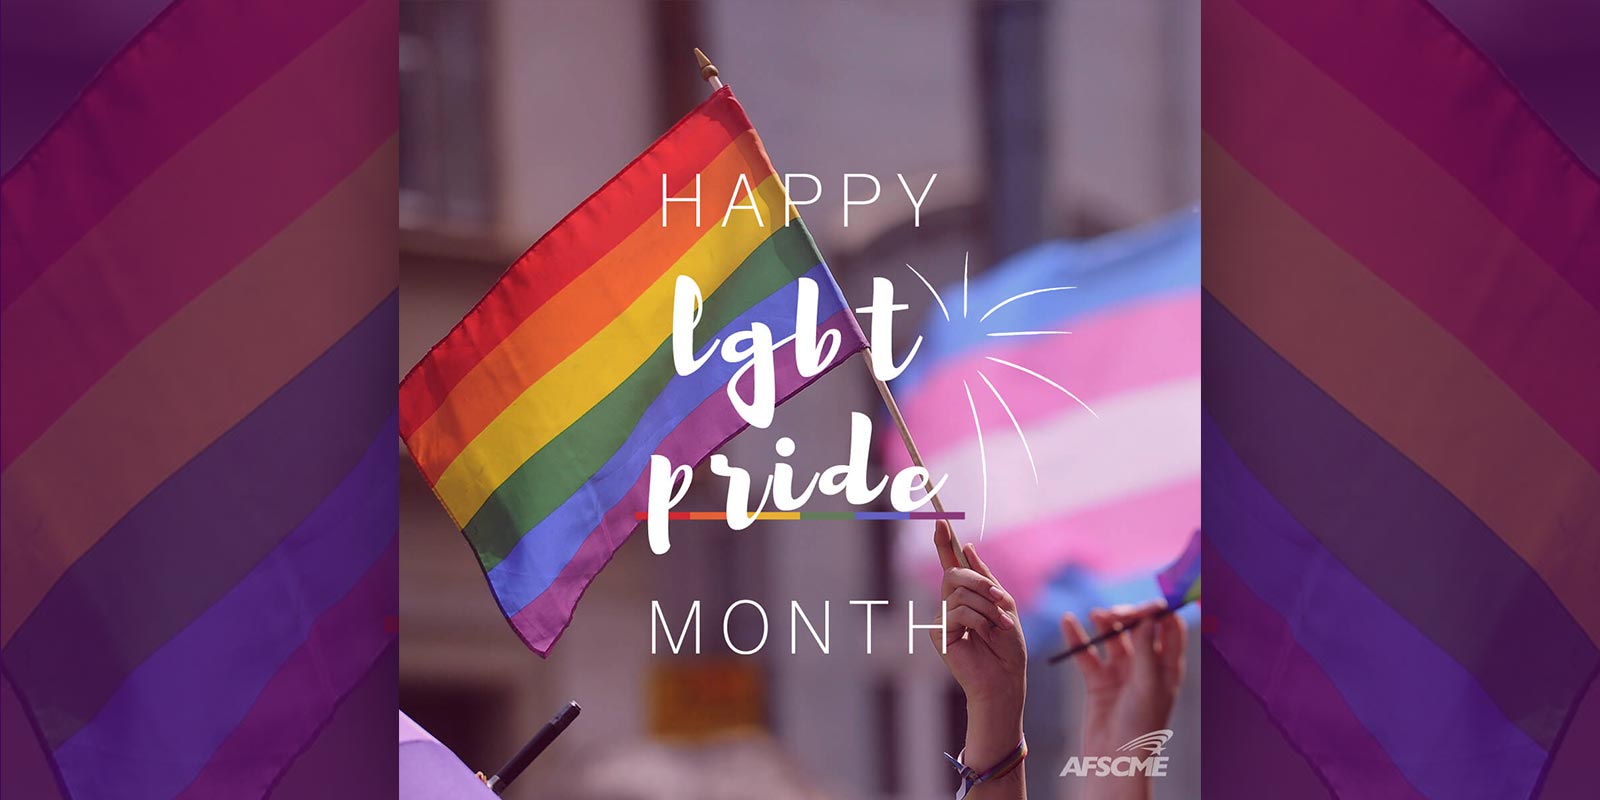 Happy LGBT Pride Month!